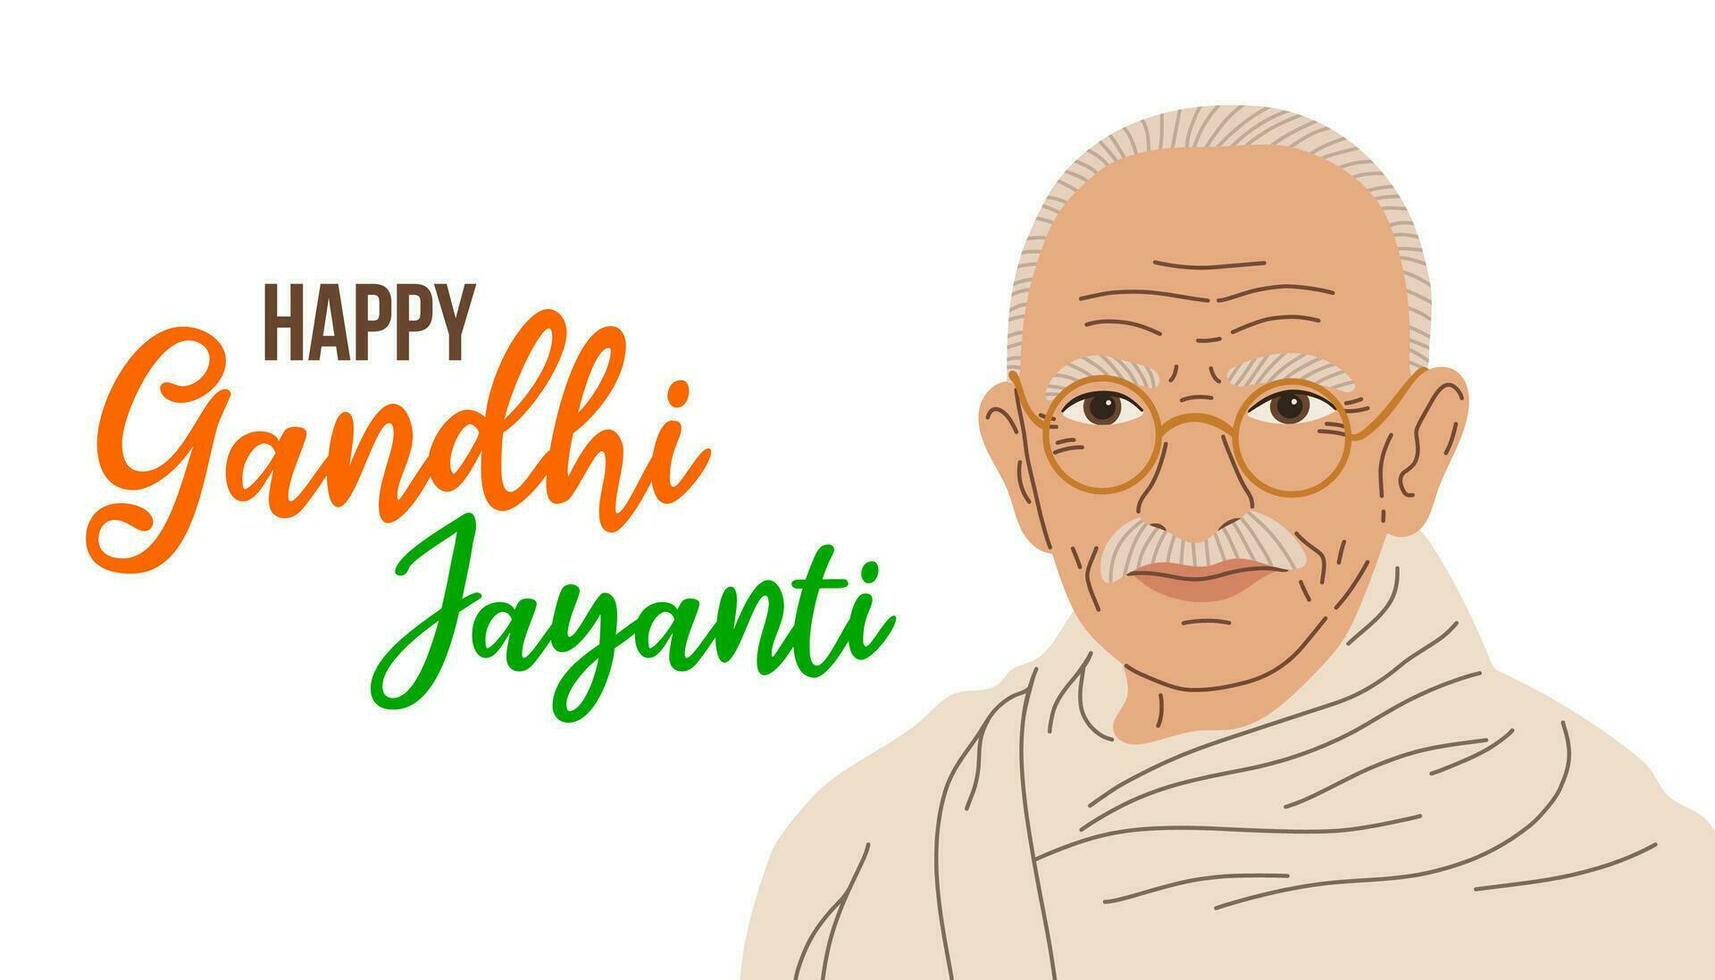 glücklich Gandhi Jayanti Vektor Illustration. mohandas Karam Chandra Gandhi Geburtstag. Vektor Illustration